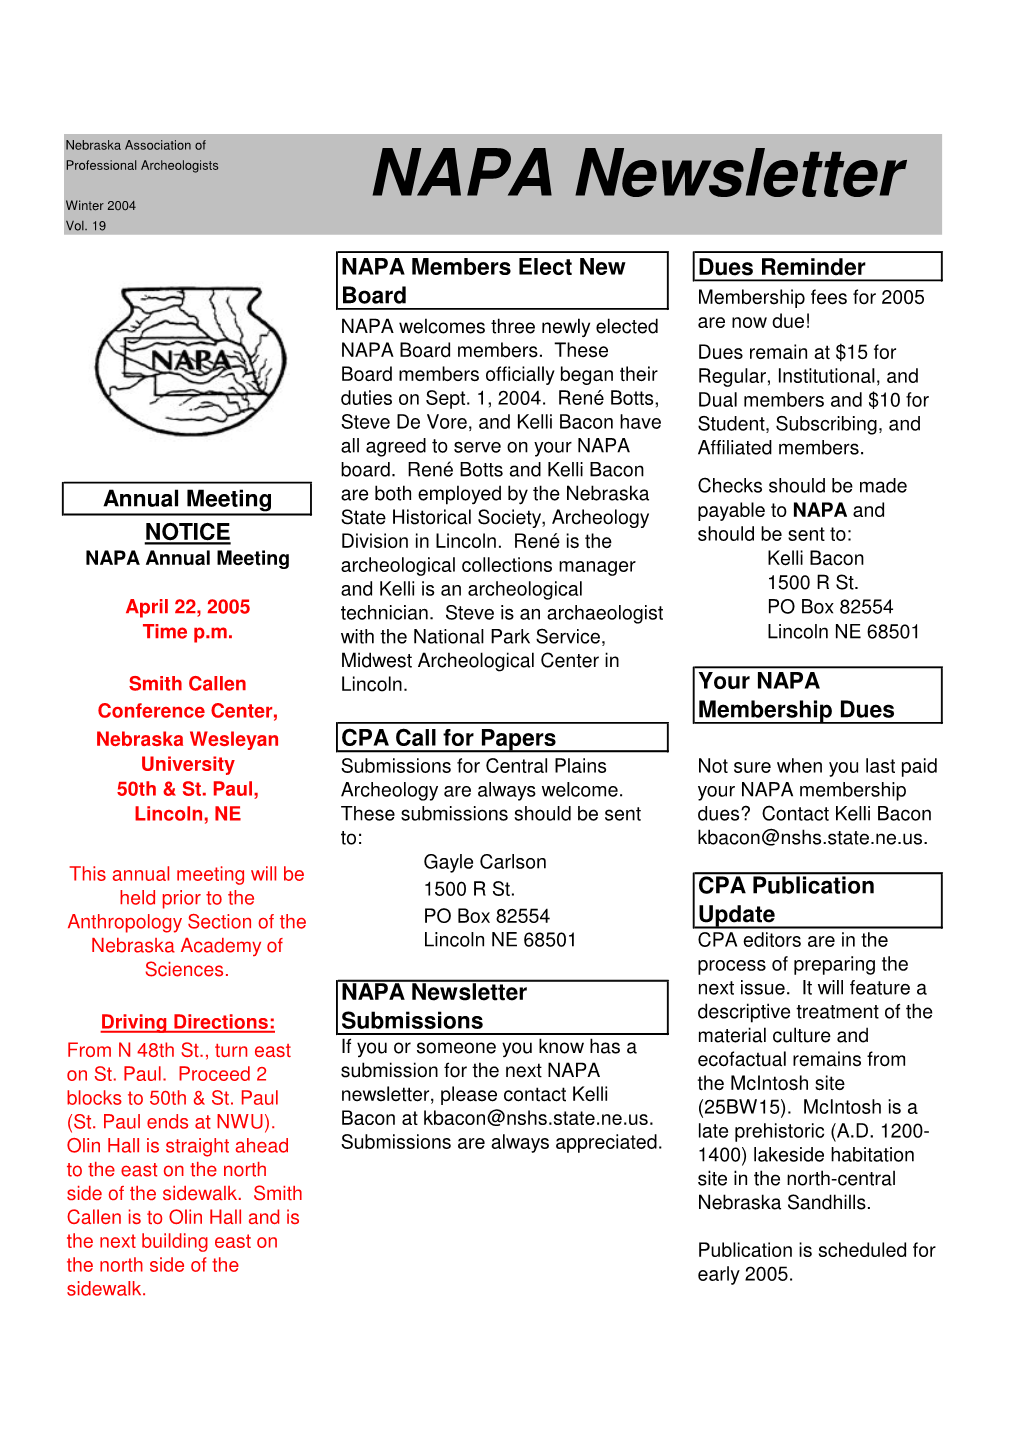 NAPA Newsletter Winter 2004 Vol